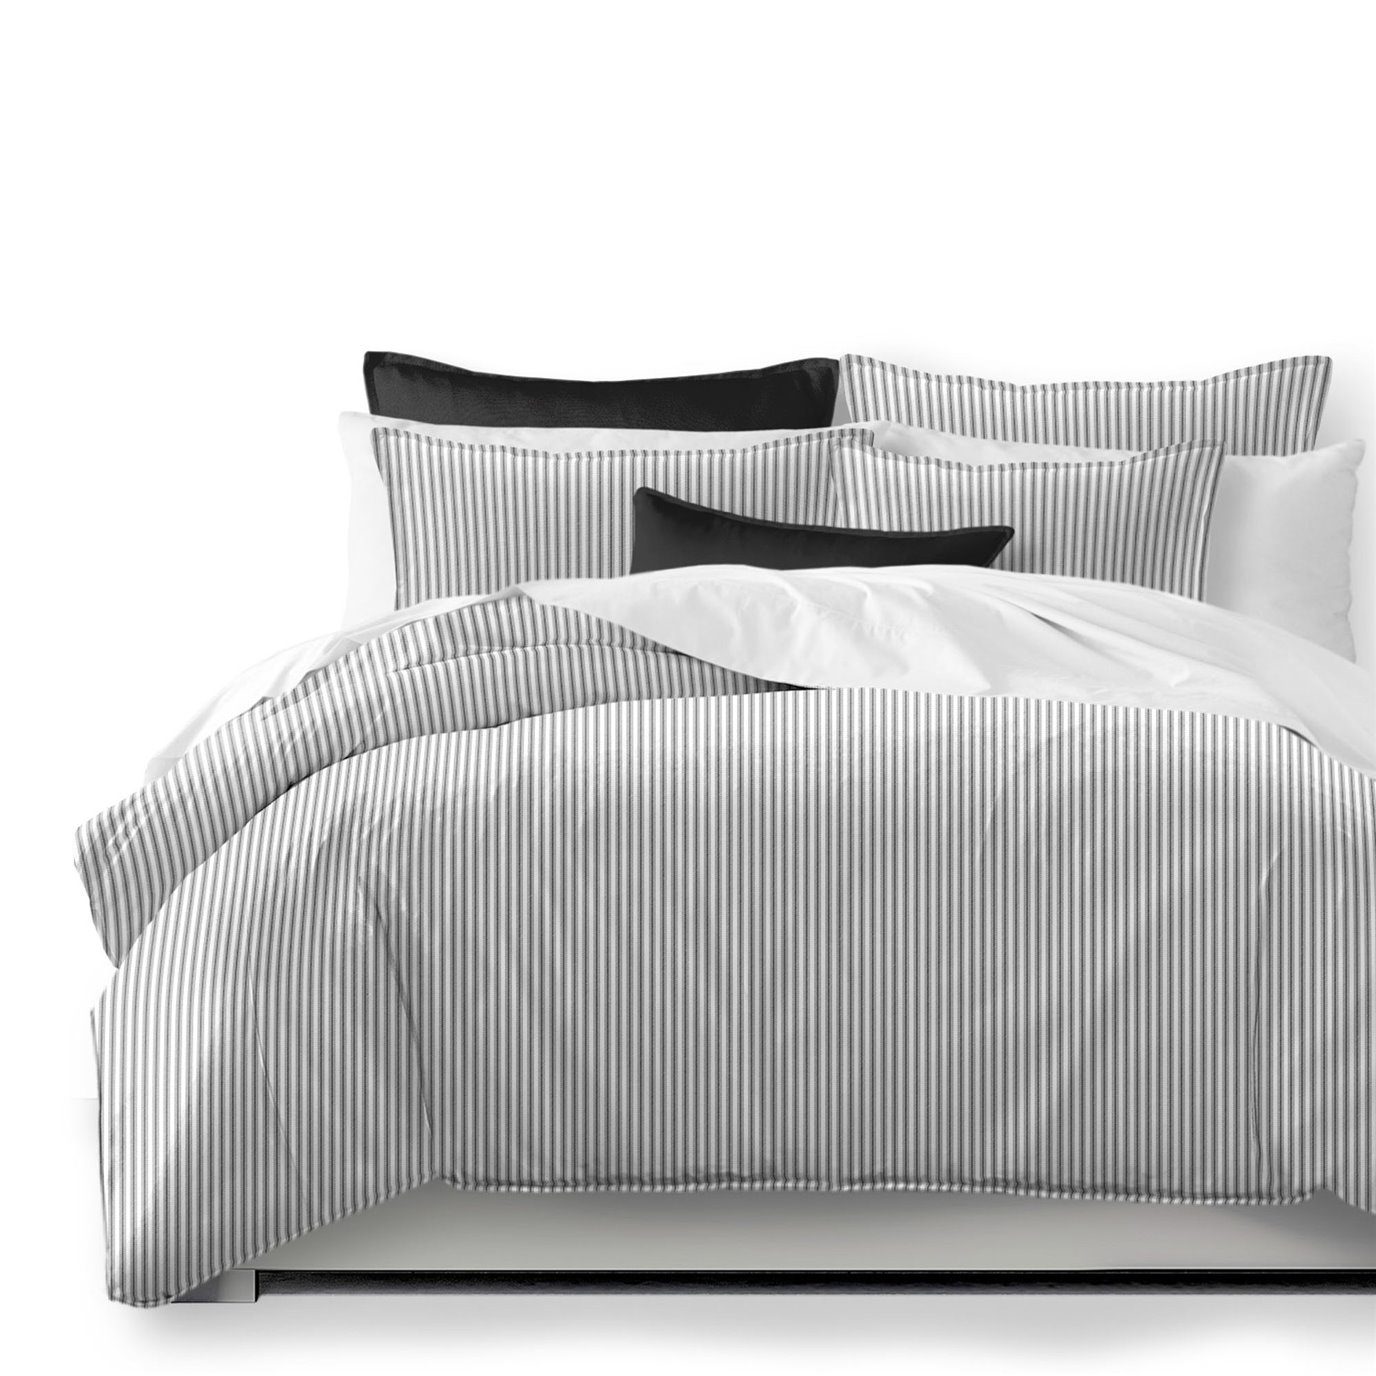 Cruz Ticking Stripes White/Black Duvet Cover and Pillow Sham(s) Set - Size Queen